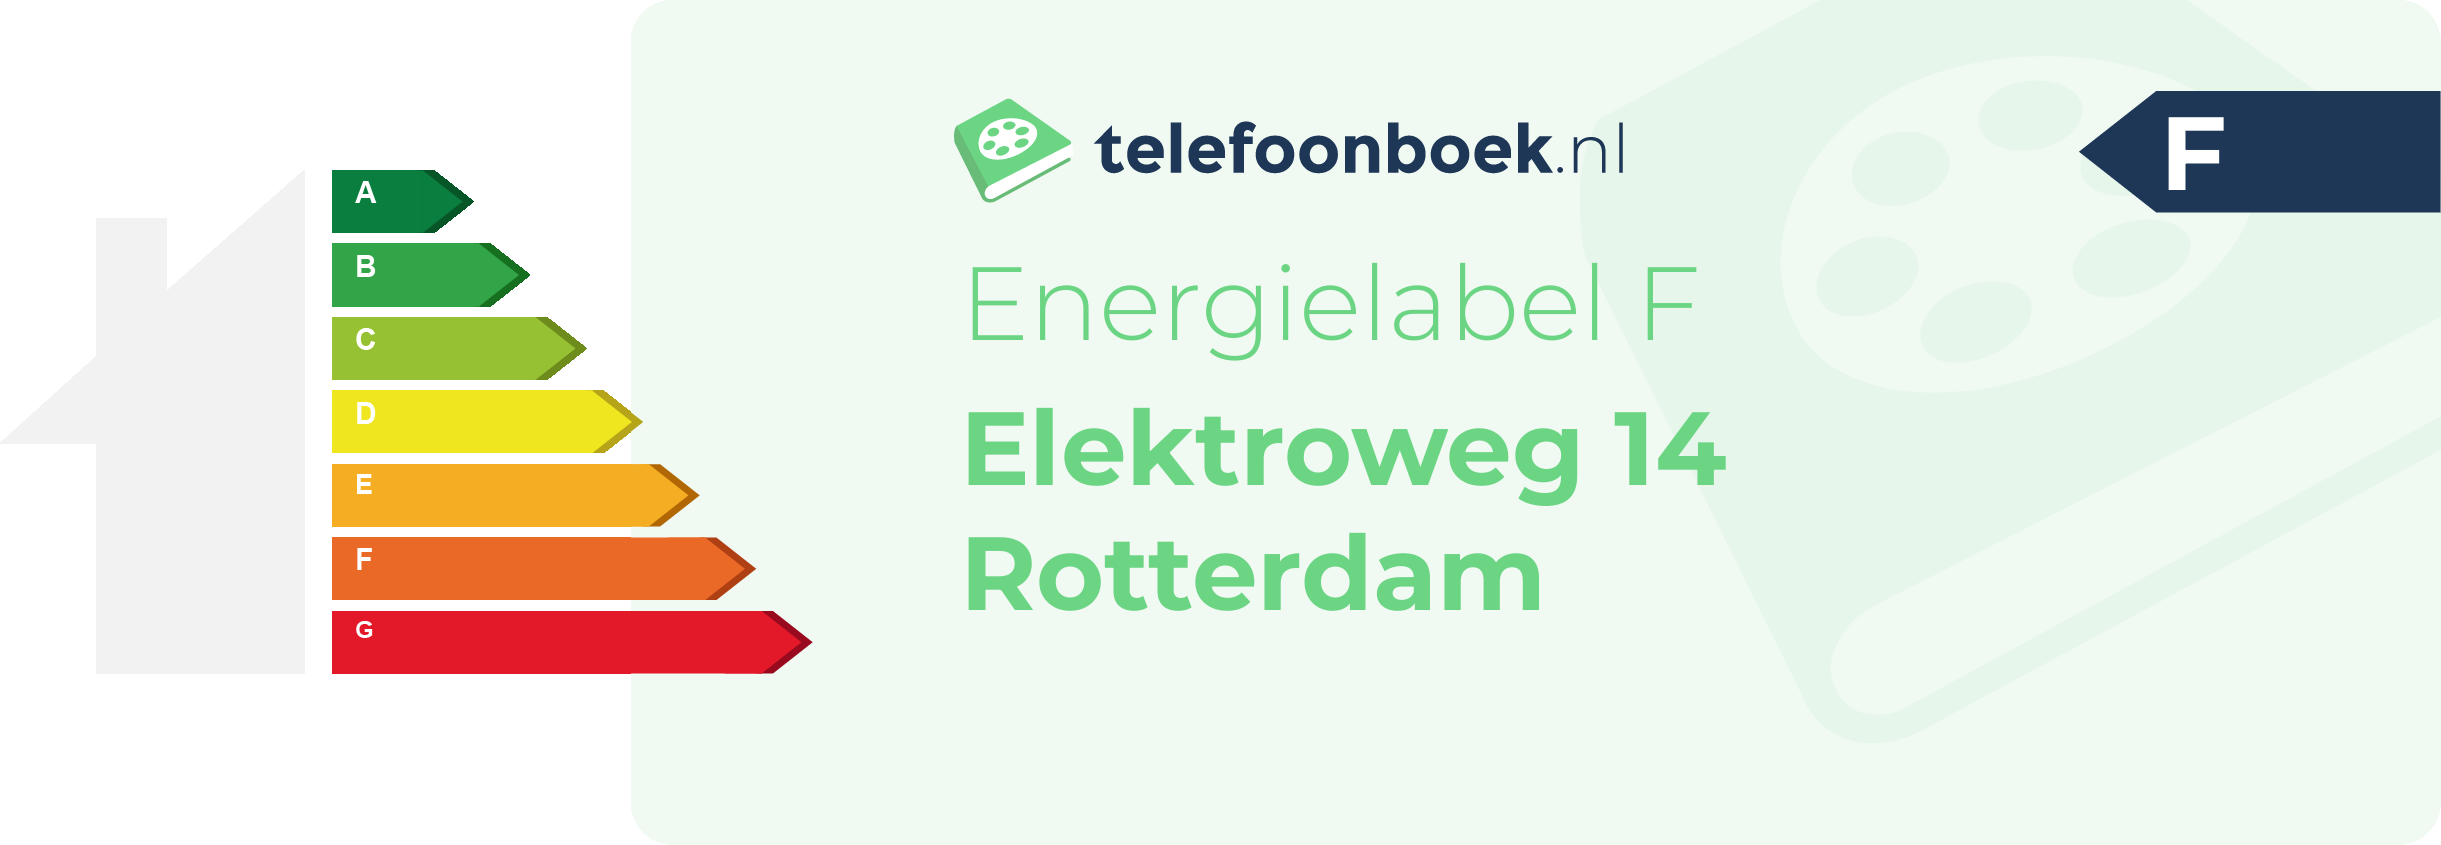 Energielabel Elektroweg 14 Rotterdam